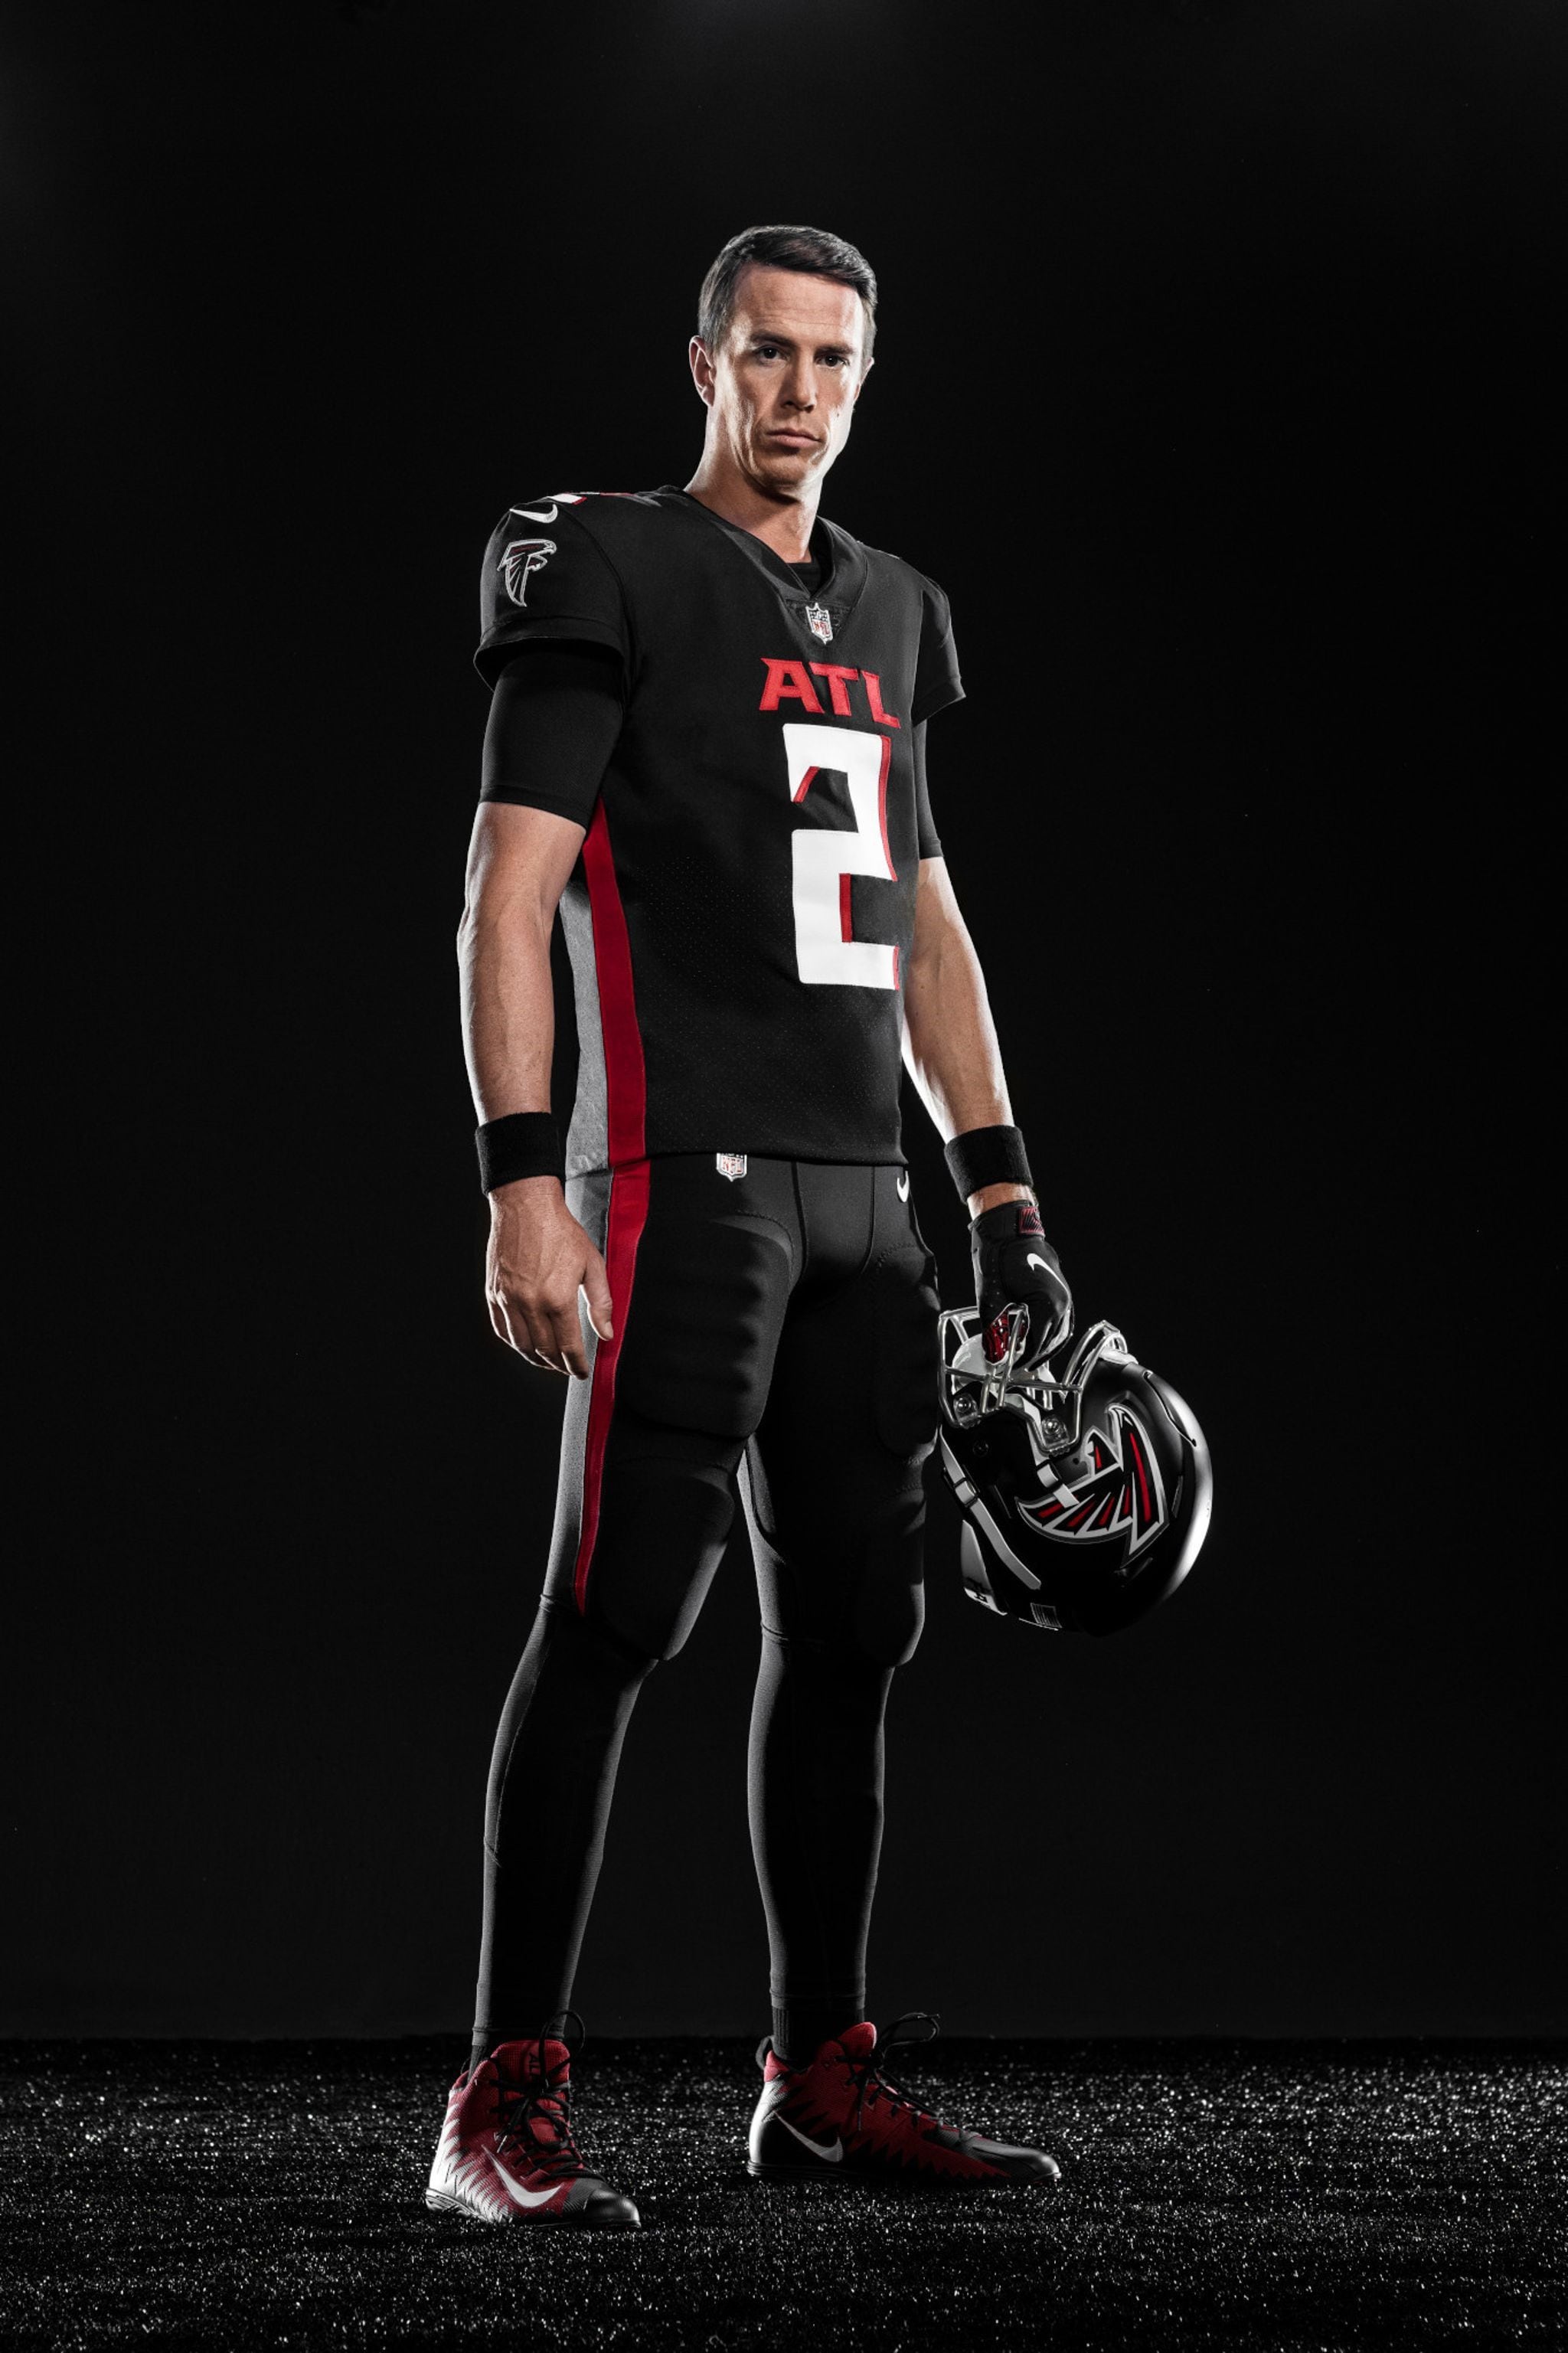 Carolina Panthers Crap All Over Falcons New Uniforms In Hilarious